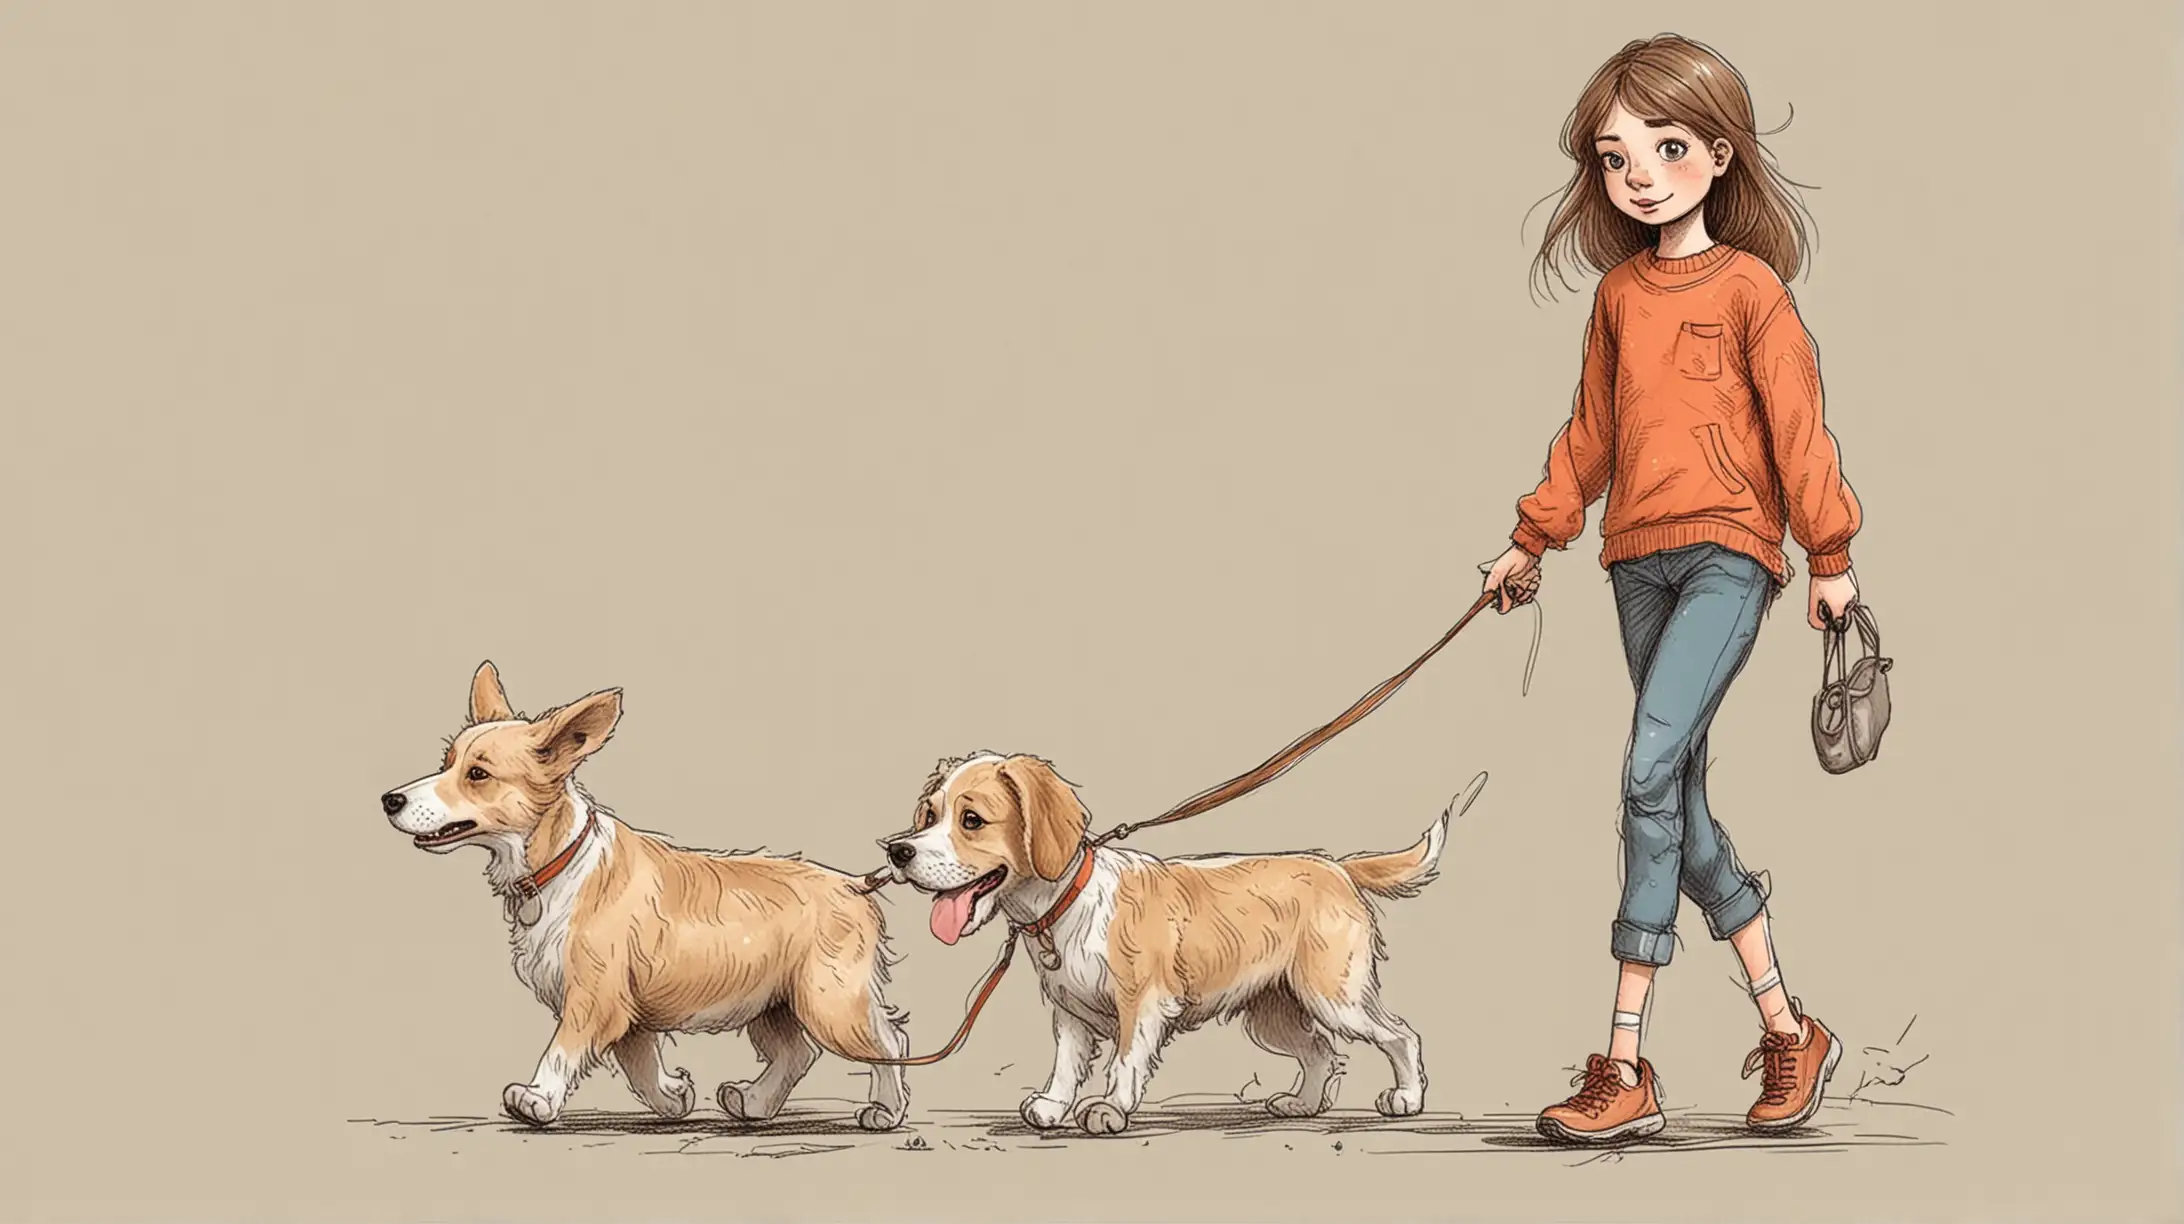 Girl Walking with a Dog Whimsical Cartoon Illustration of a Joyful Stroll